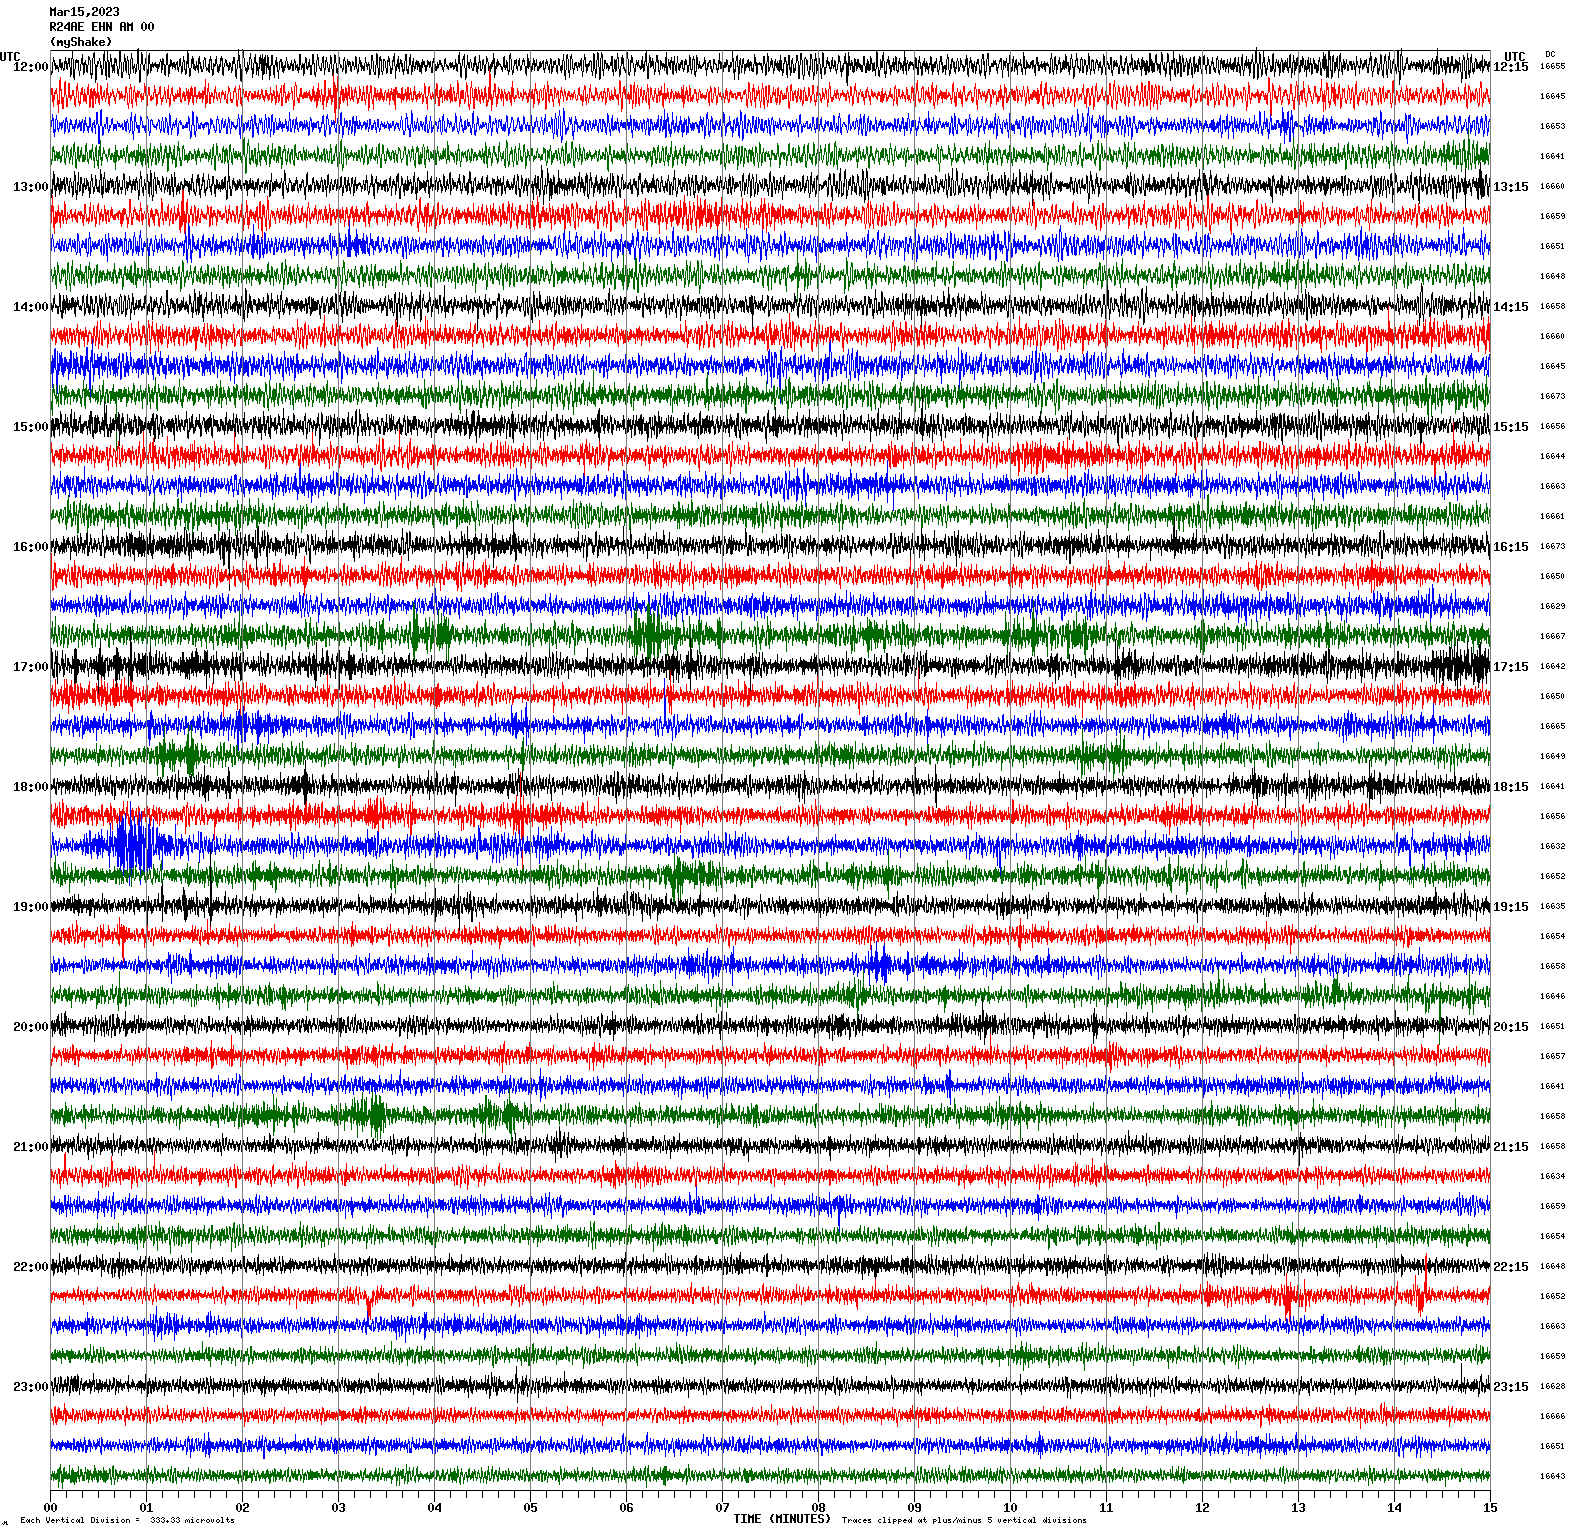 /seismic-data/R24AE/R24AE_EHN_AM_00.2023031512.gif